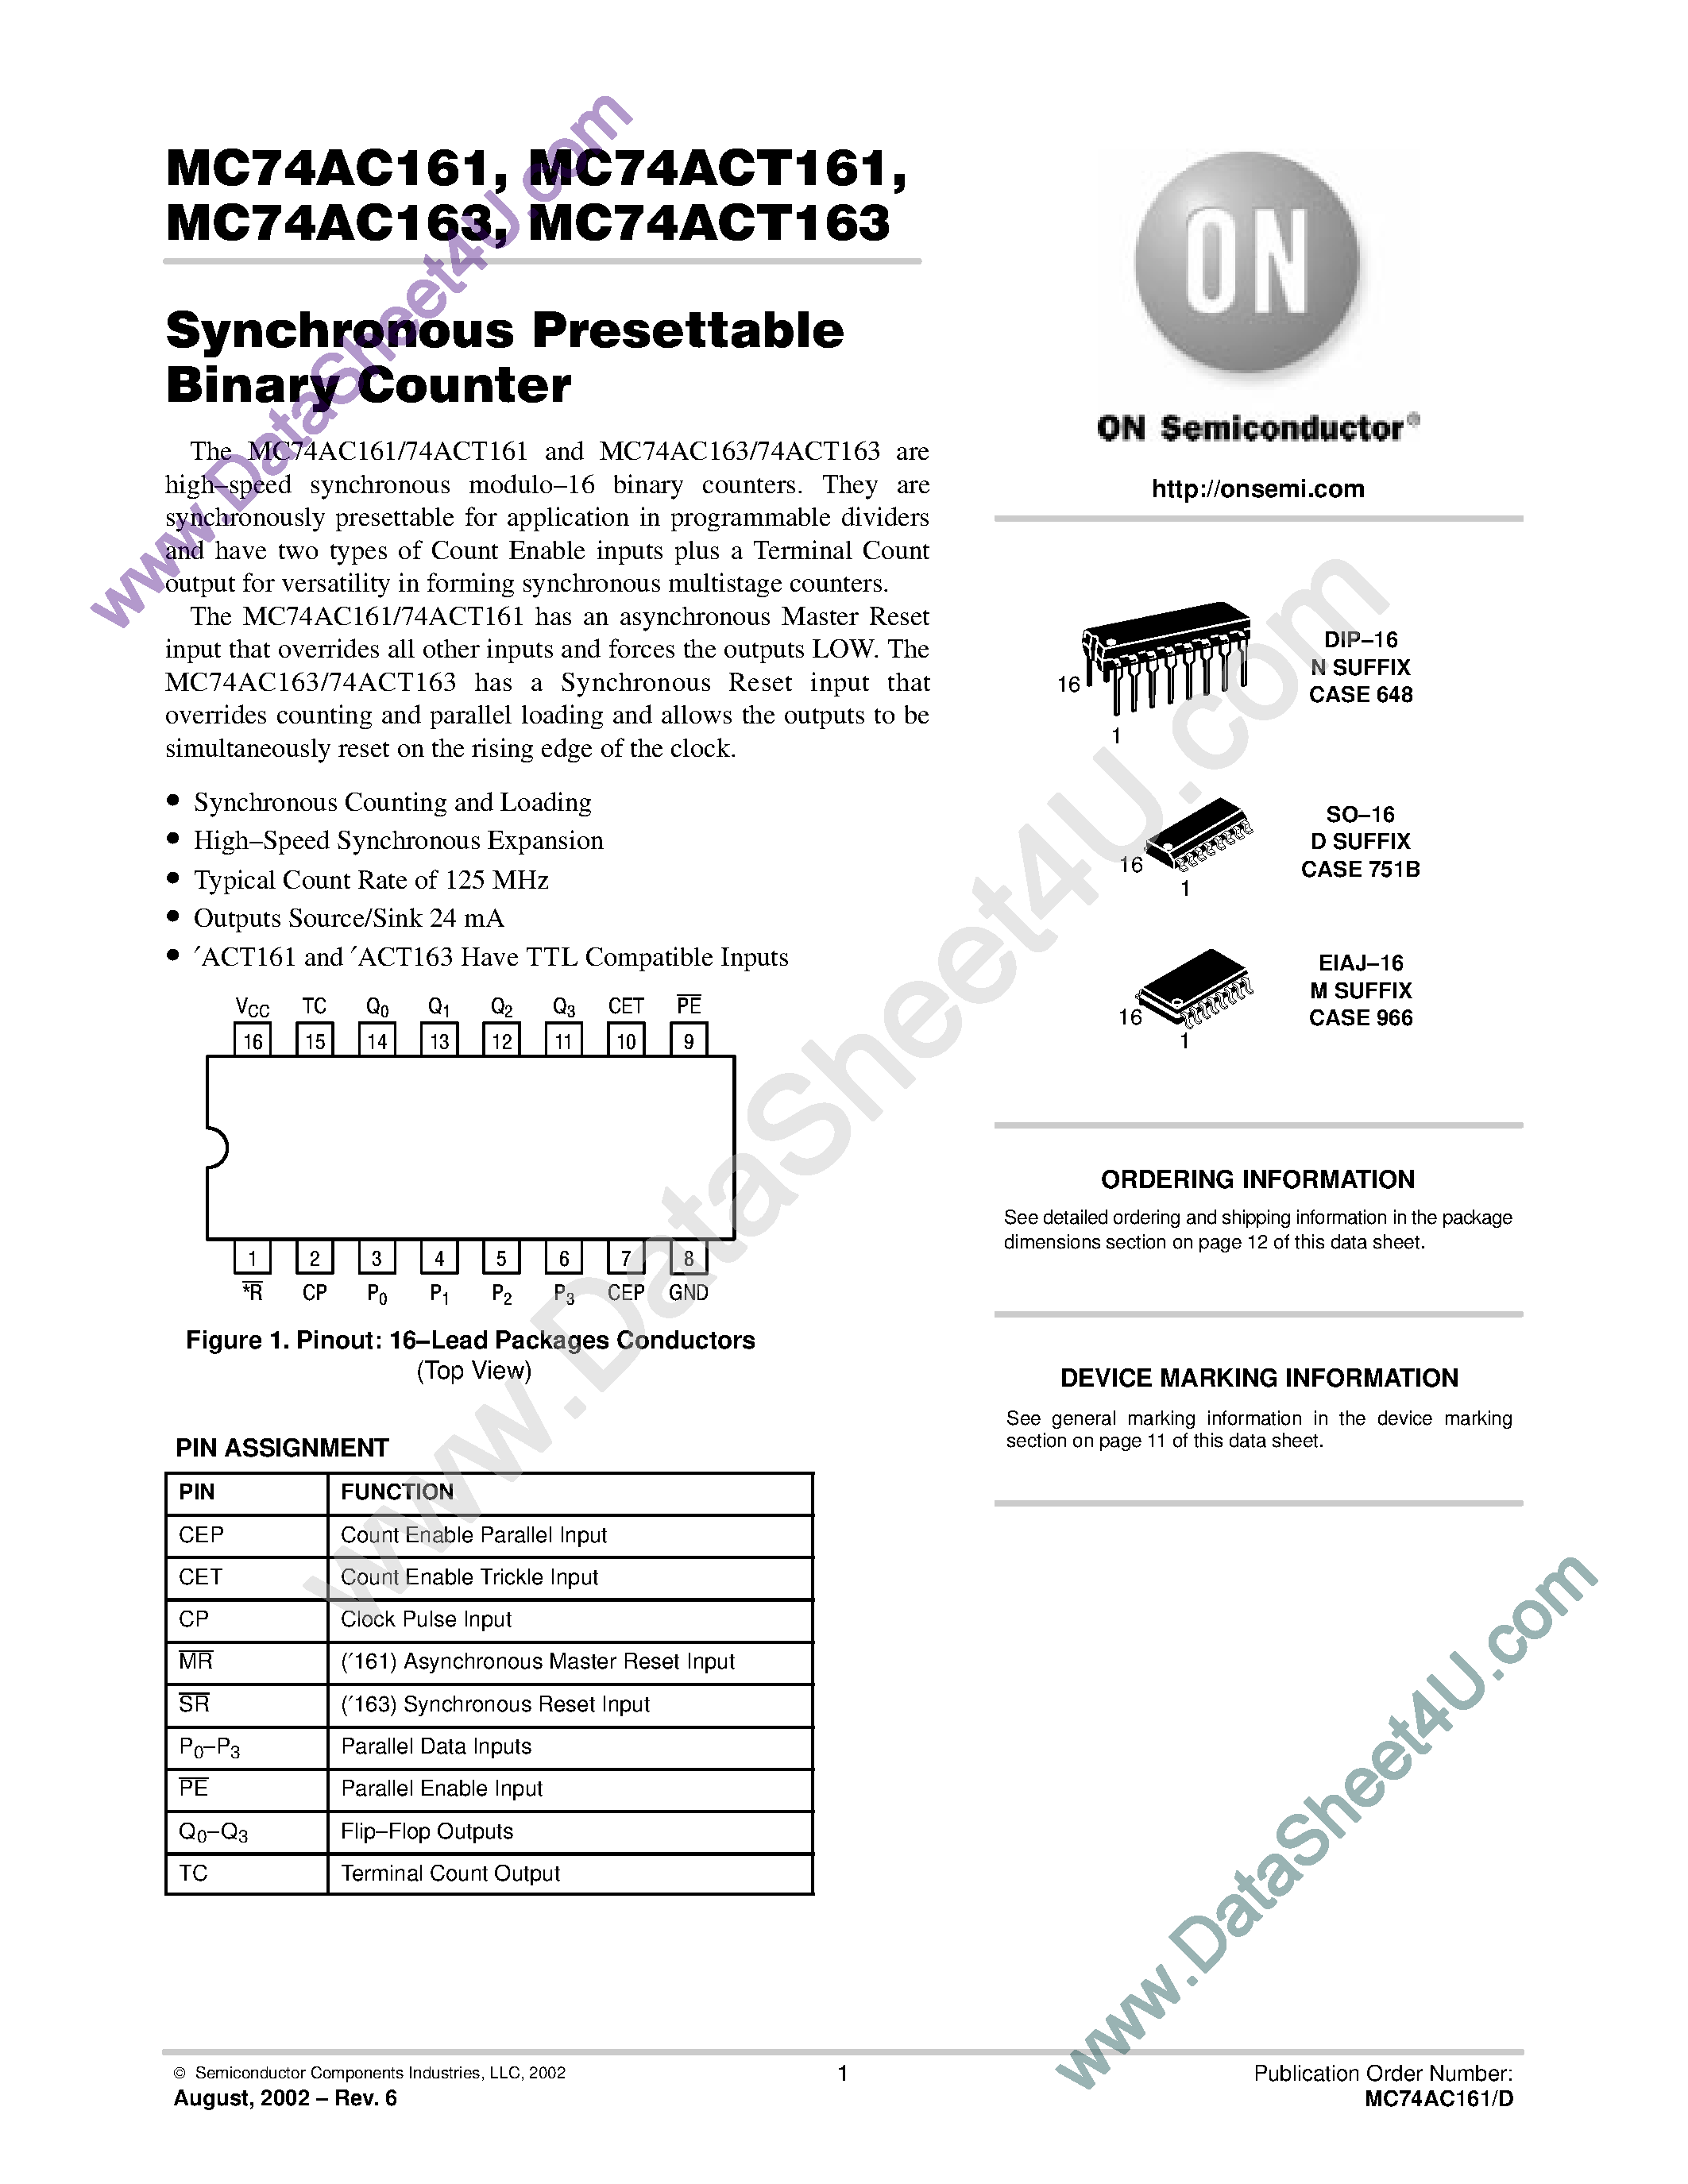 Datasheet MC74AC161 - (MC74ACT161 / MC74ACT163) Synchronous Presettable Binart Counter page 1